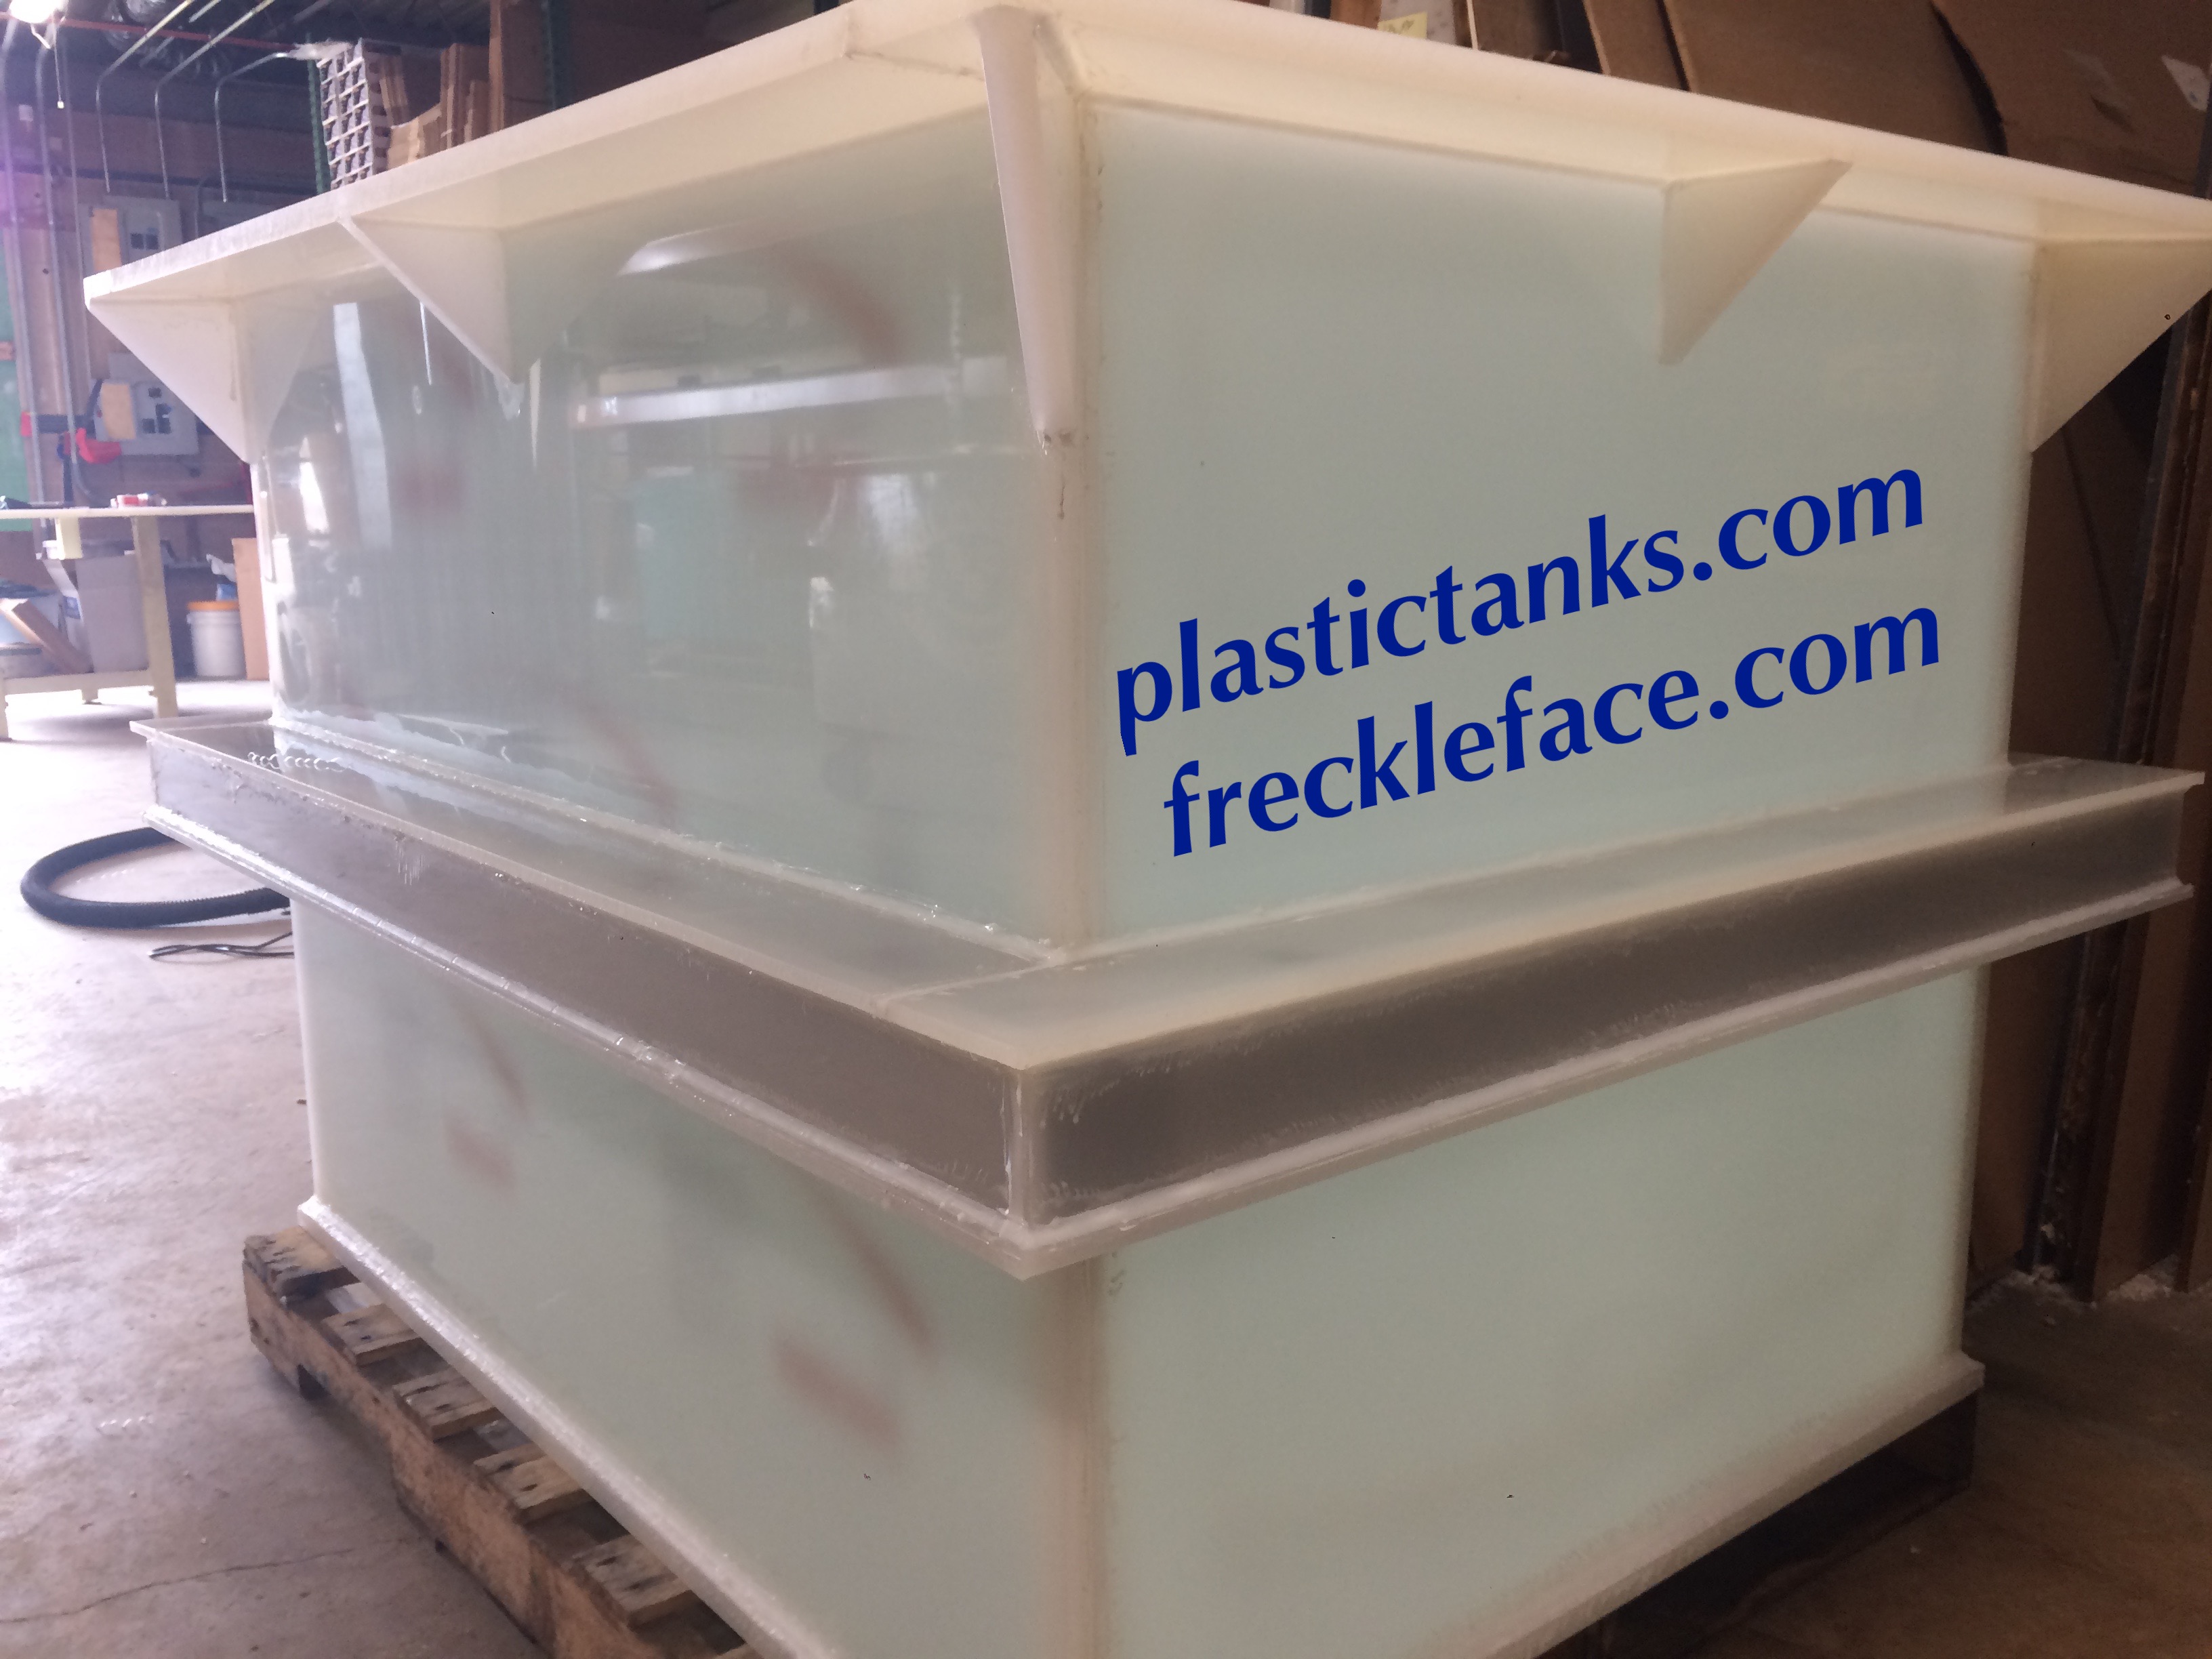 Anodizing tank made of polypropylene